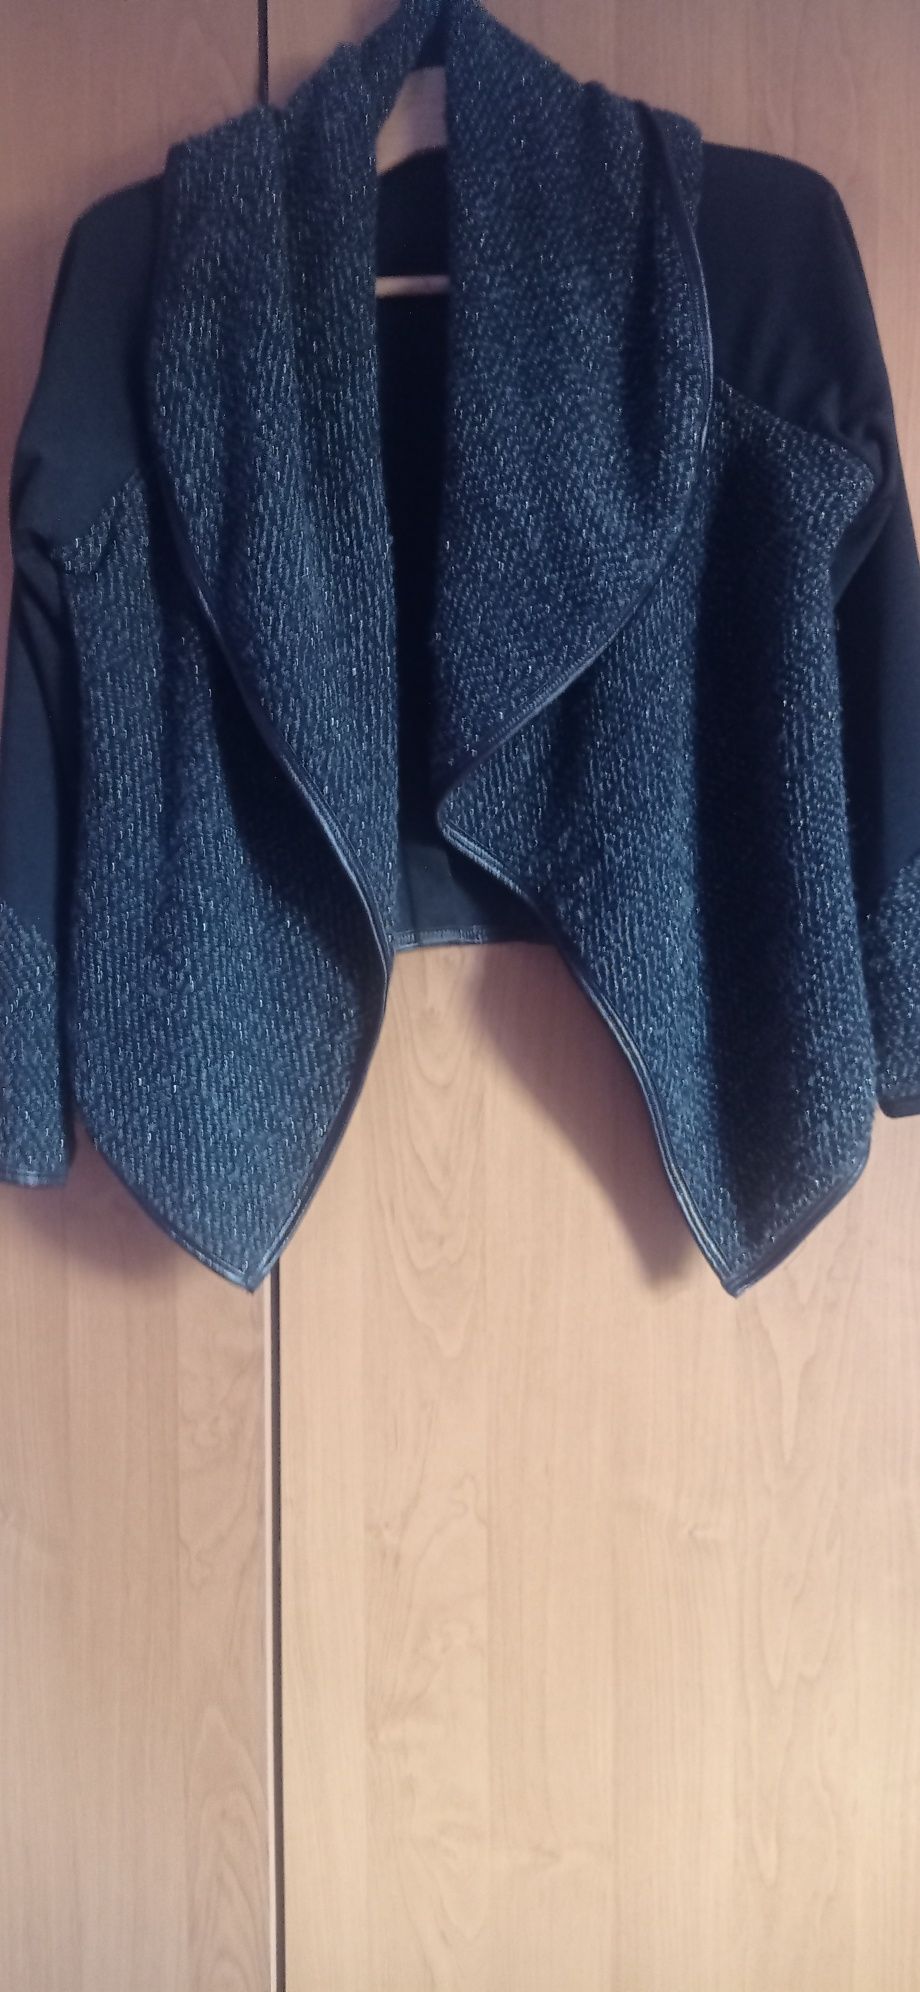 Kardigian narzutka sweterek